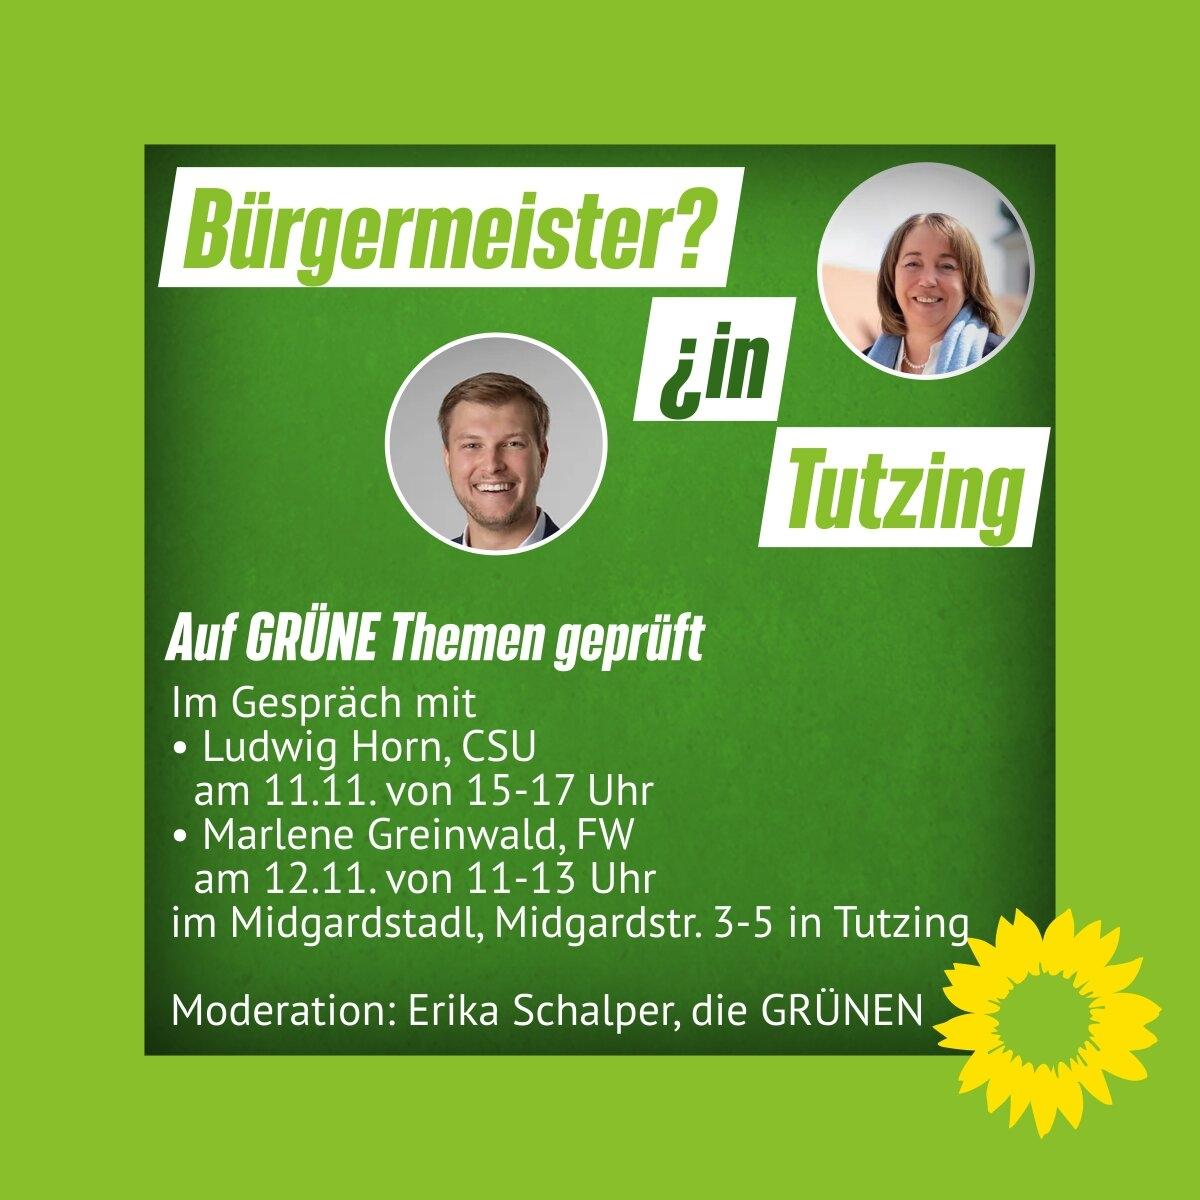 (c) Gruene-tutzing.de